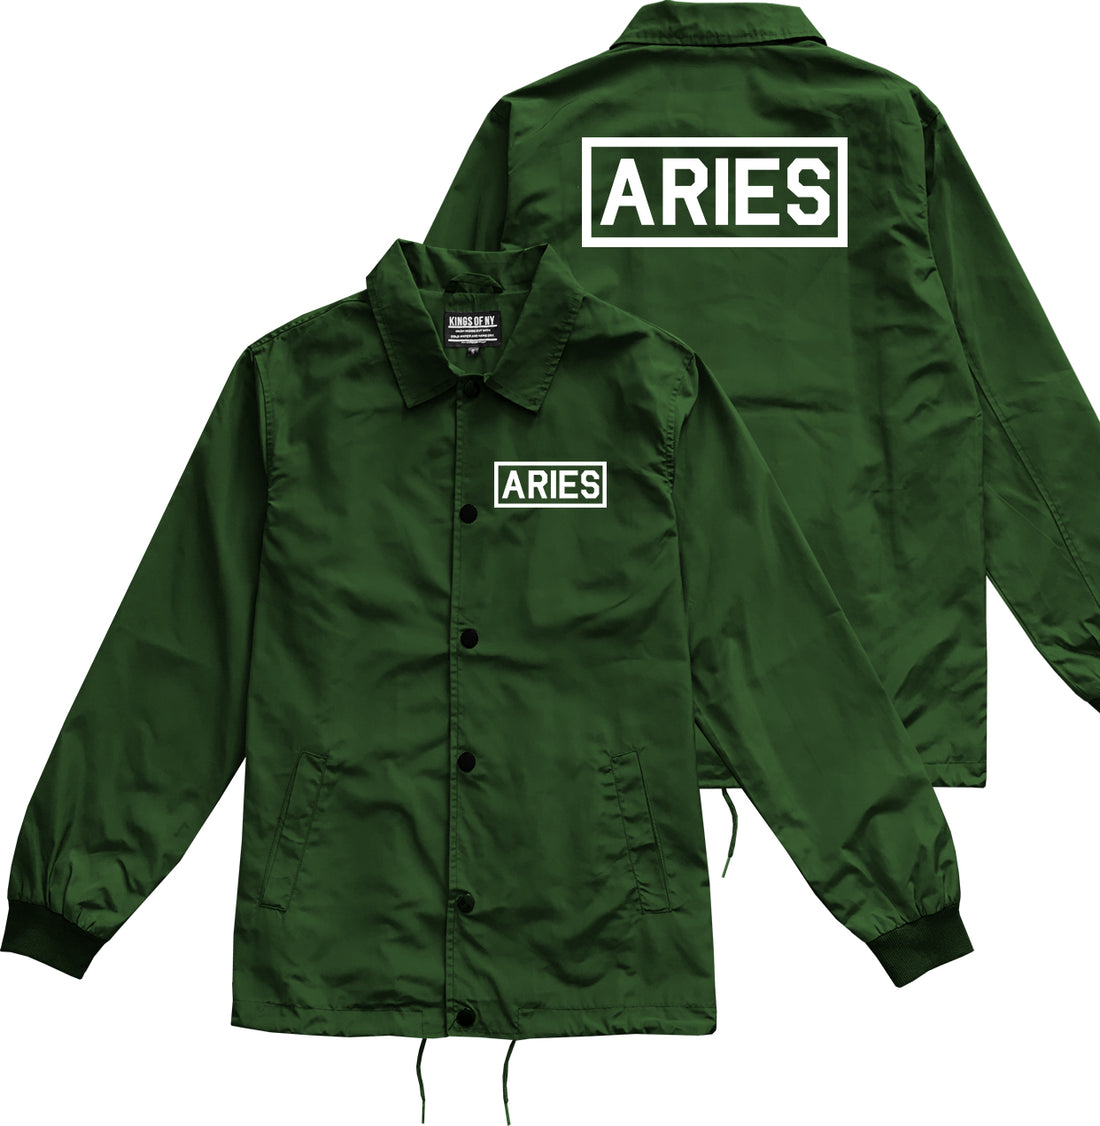 Aries Horoscope Sign Mens Green Coaches Jacket by KINGS OF NY